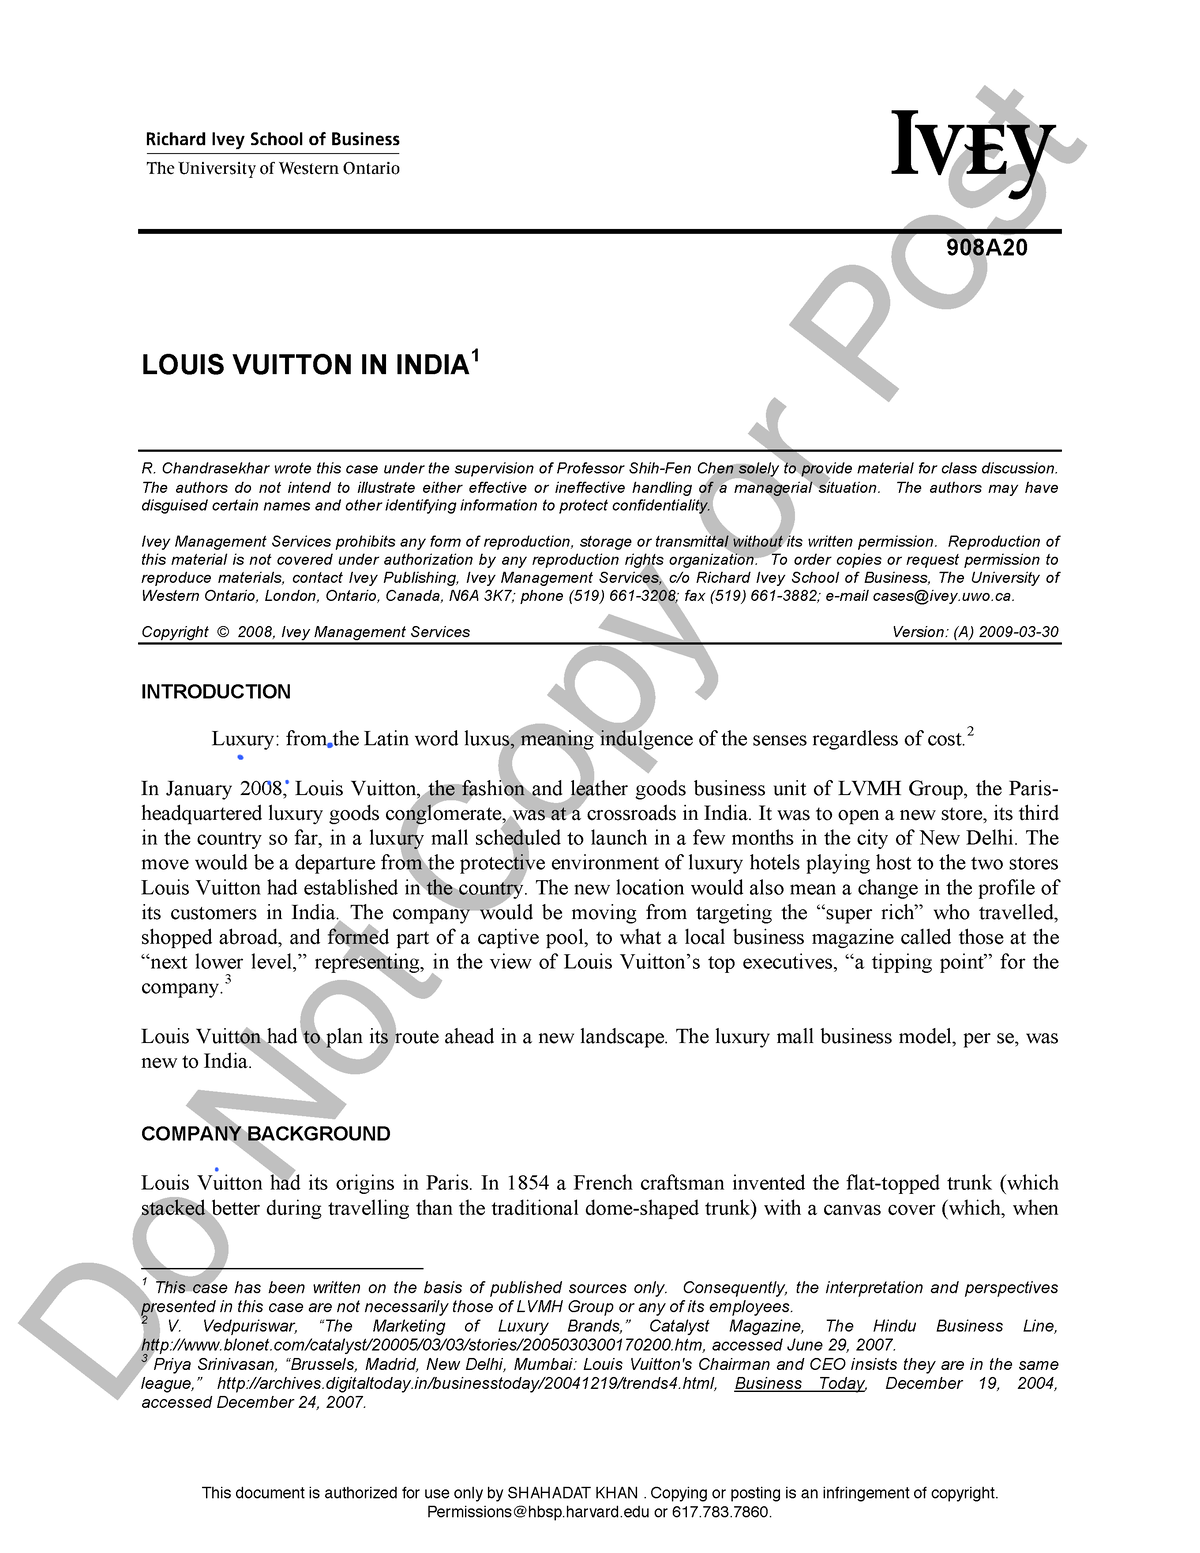 Louis Vitton Case Study Assignment2, PDF, Stocks